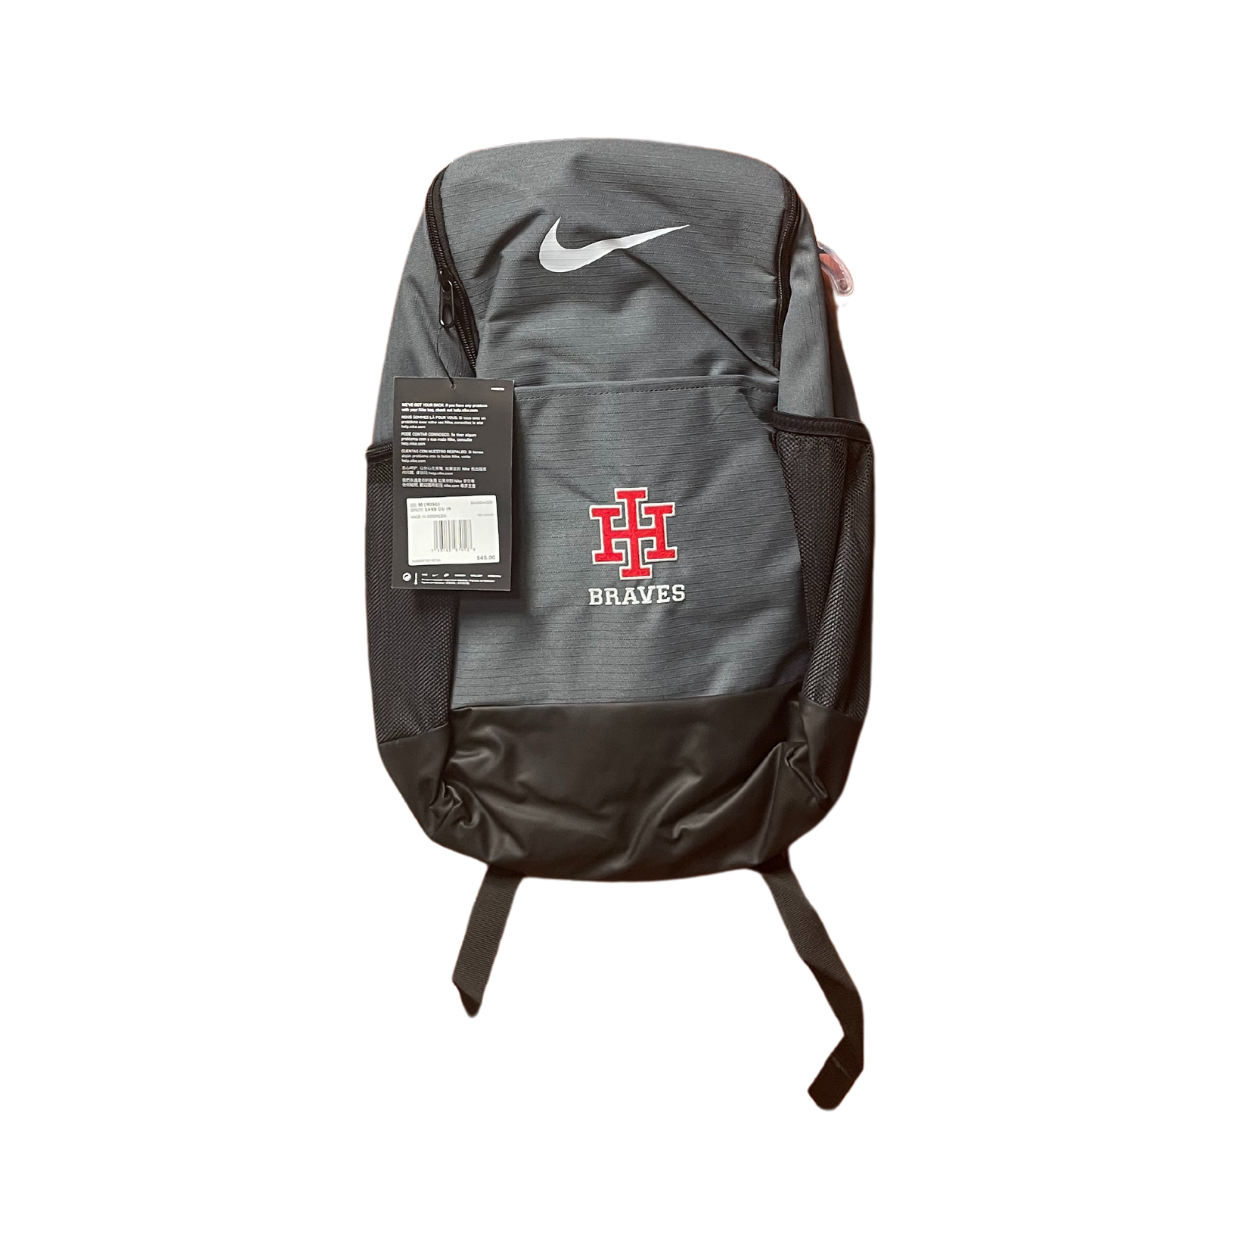 Nike Brasilia Backpack - Flint Grey